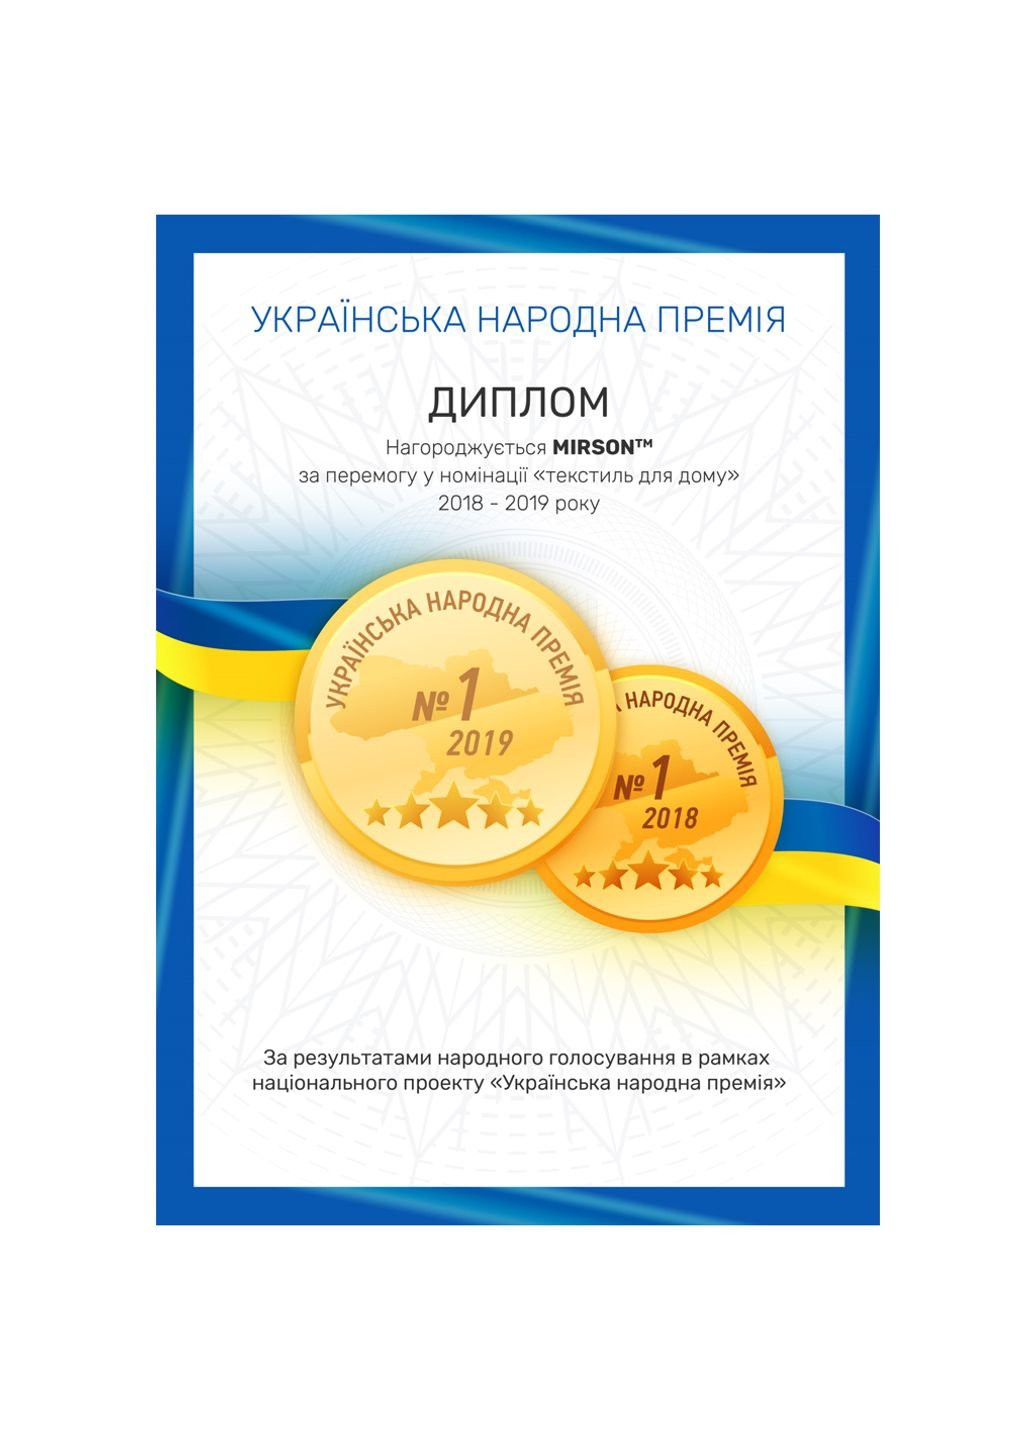 Mirson полотенце набор банный №5014 softness beige 50x90, 70x140 (2200003183061) бежевый производство - Украина